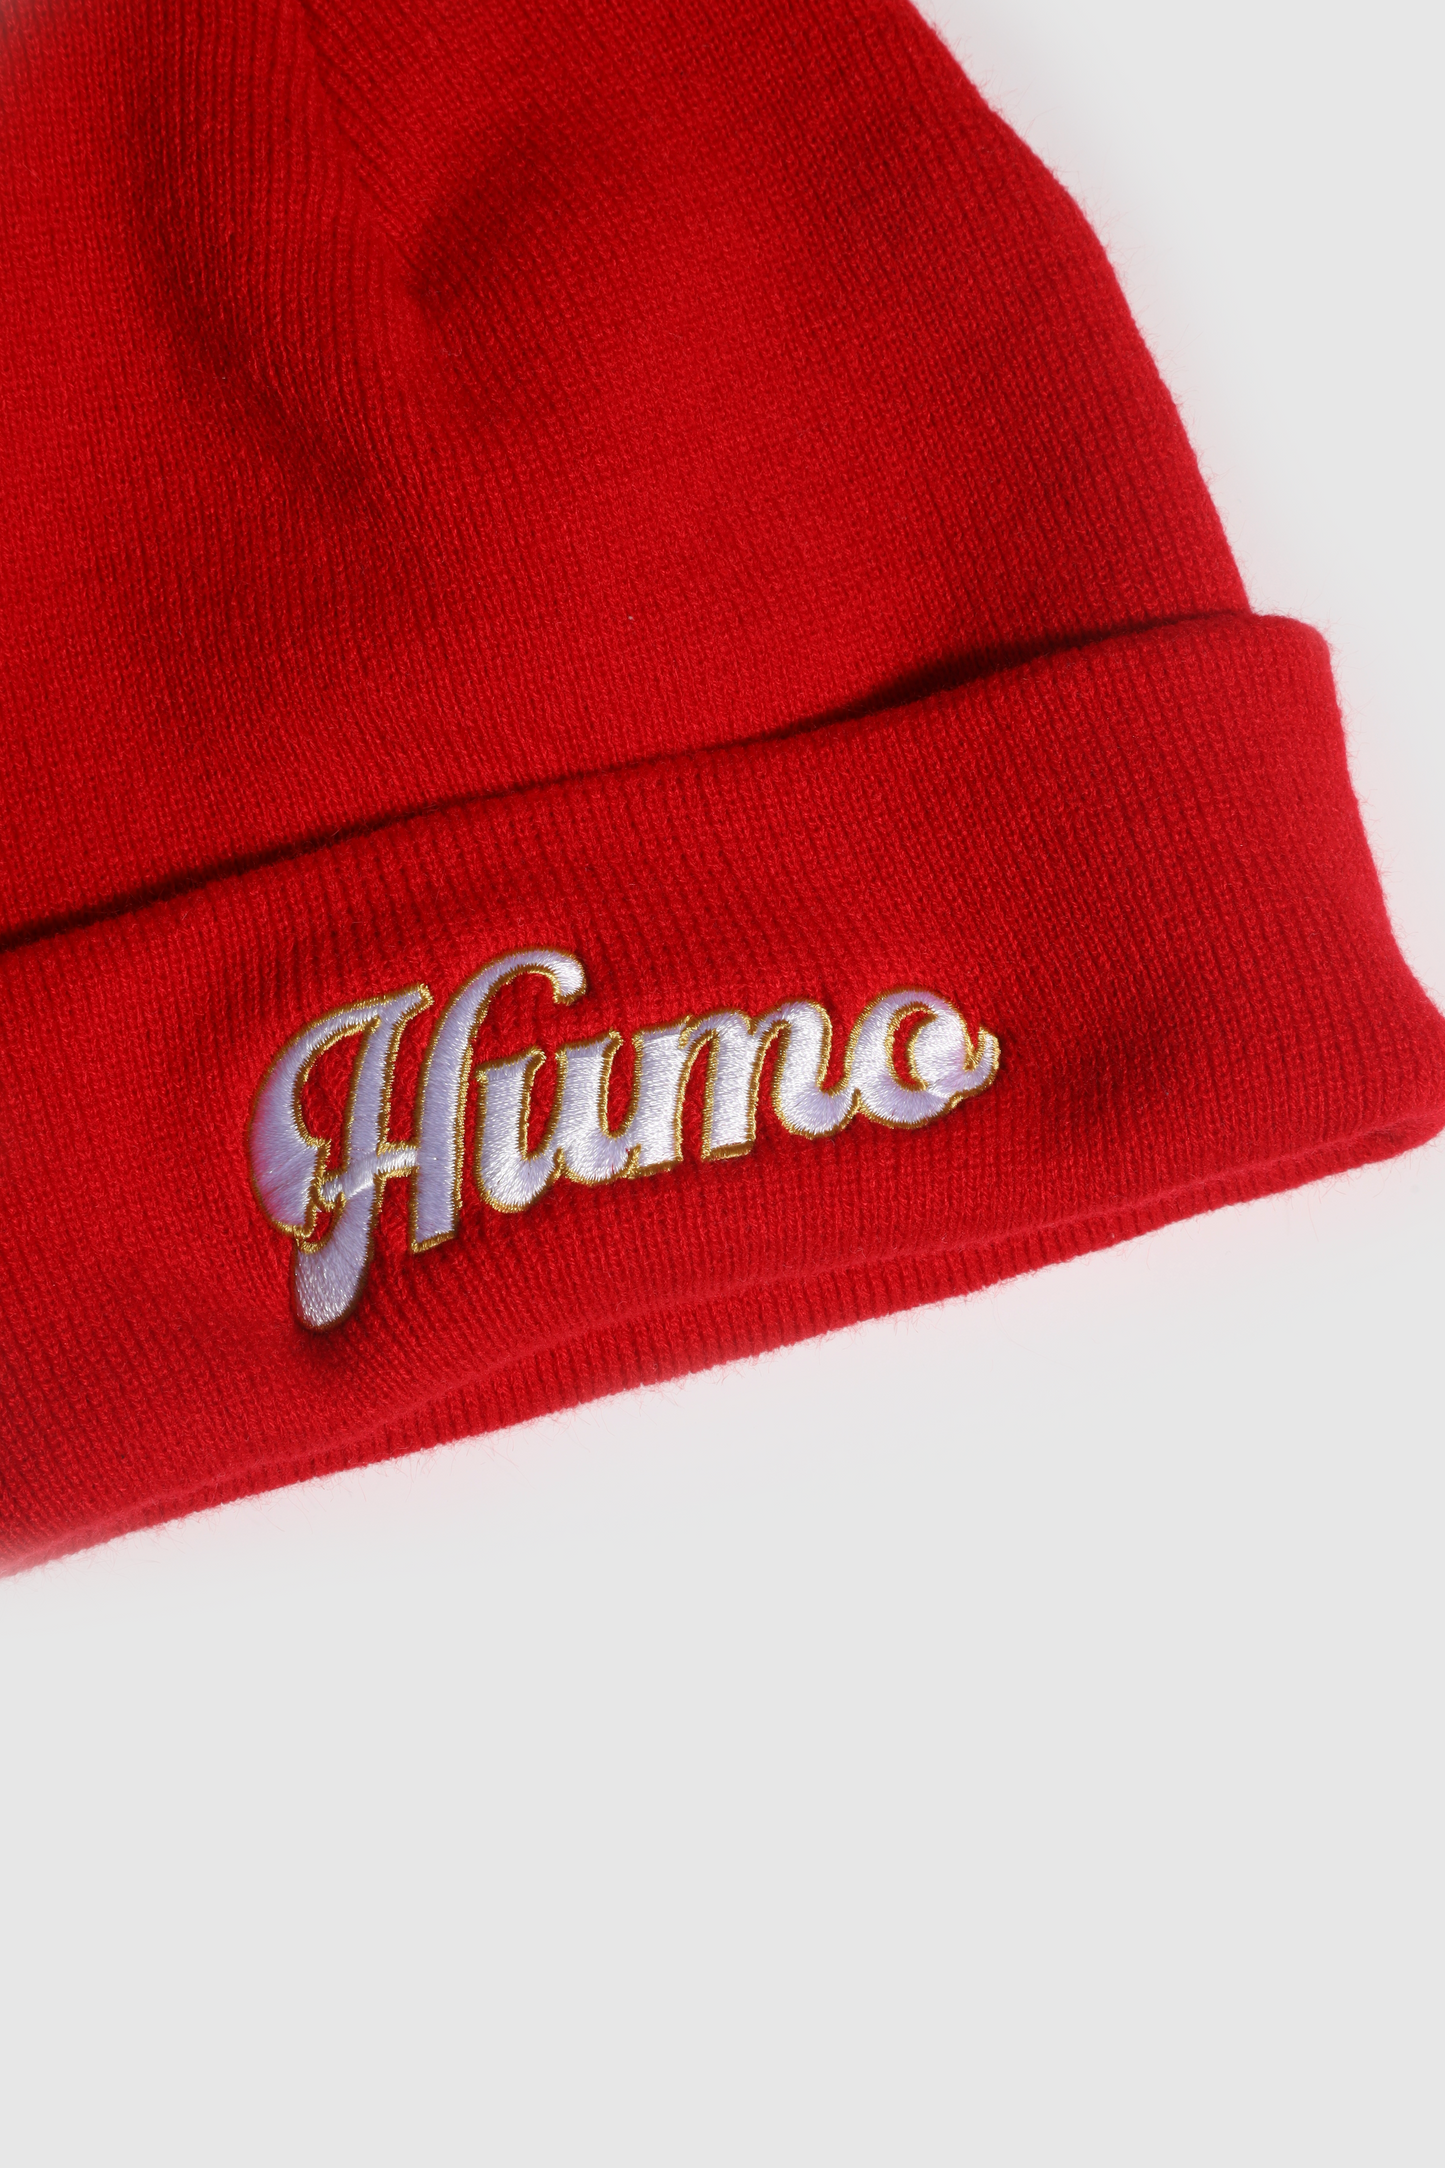 humo red beanie hat gorrito close up